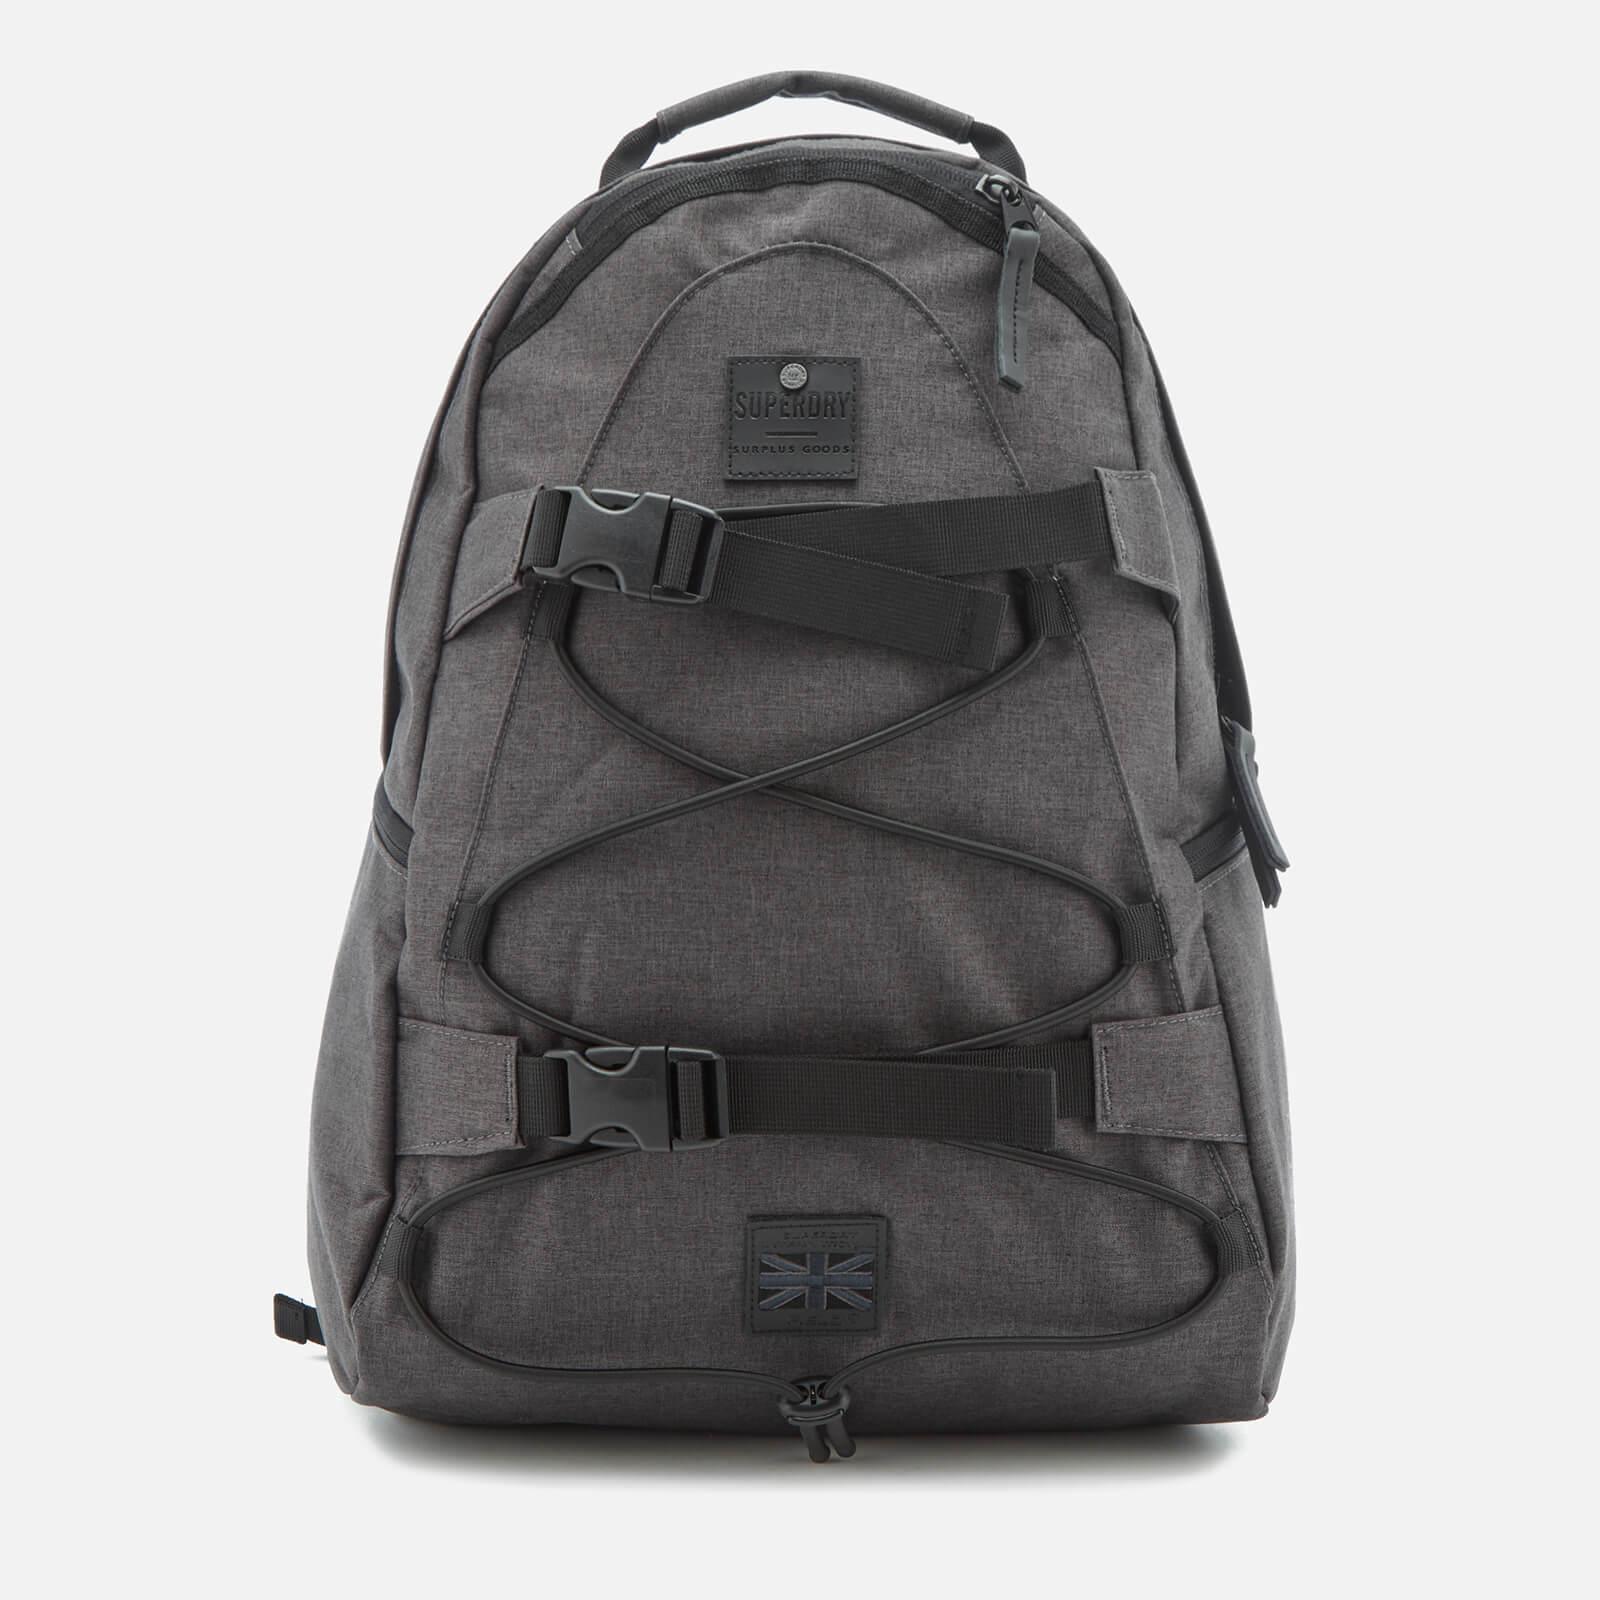 Superdry Surplus Goods Backpack for Men - Lyst